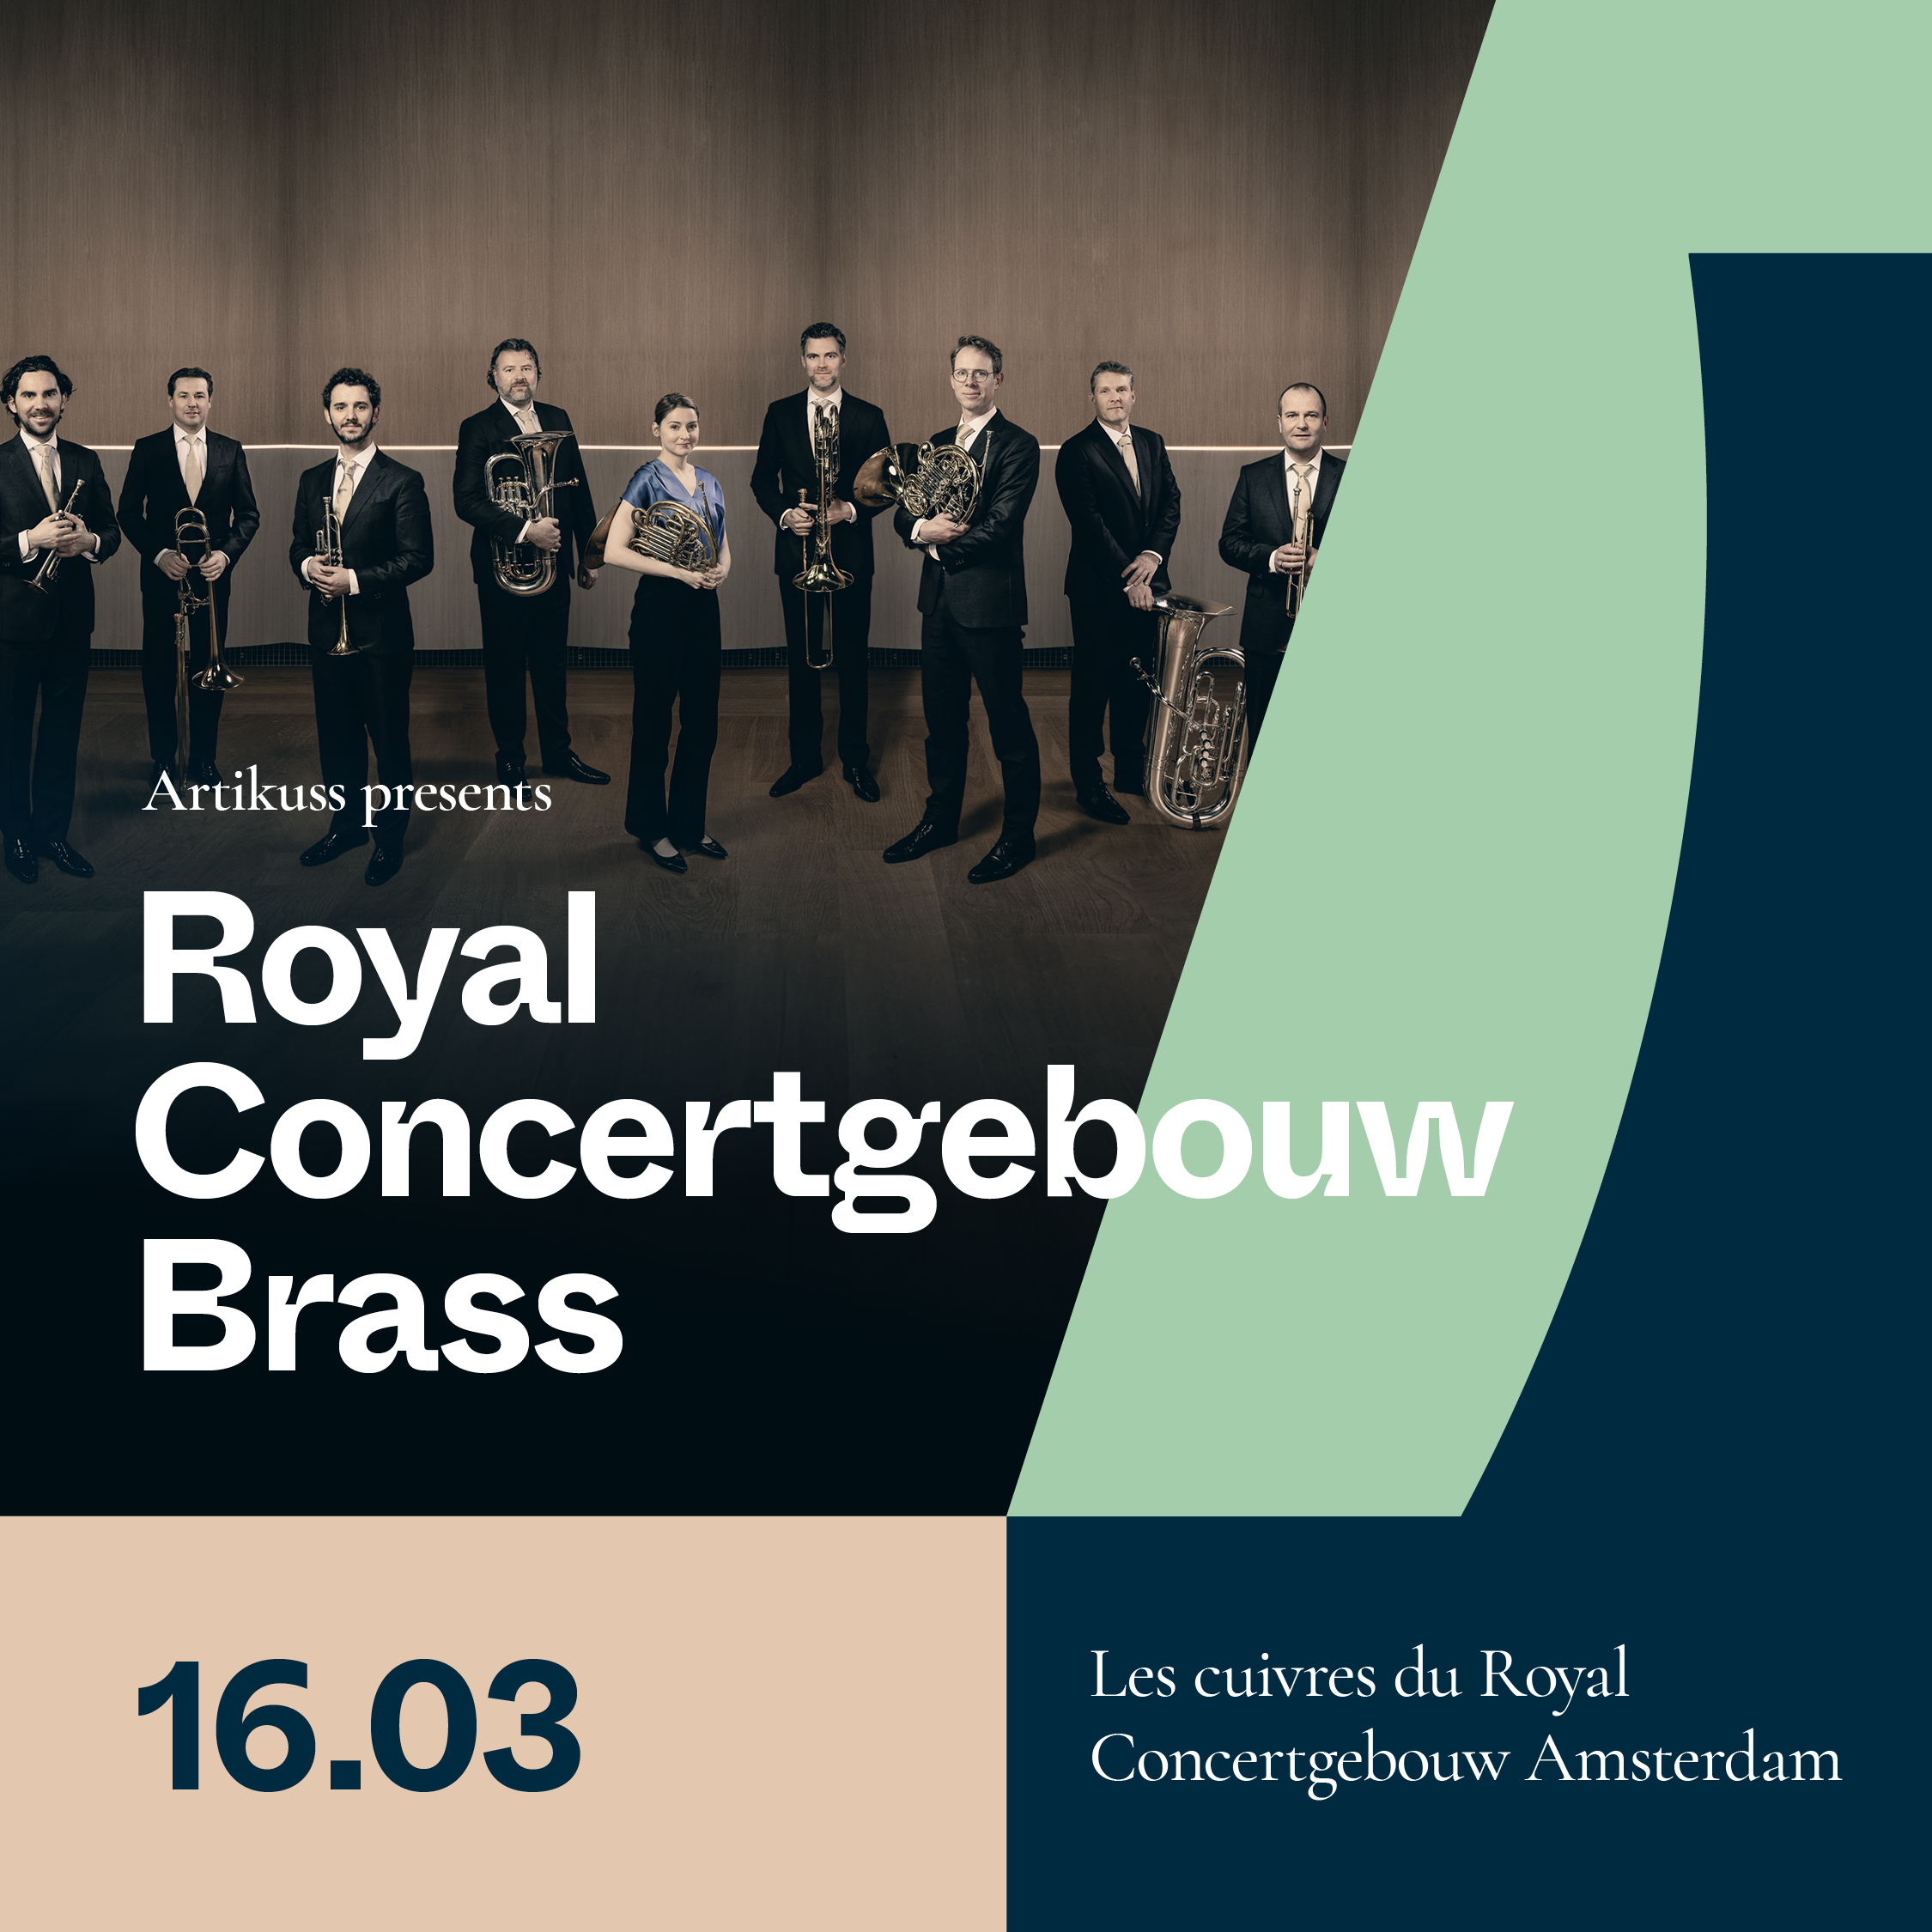 Royal Concertgebouw Brass - Les cuivres du Royal Concertgebouw Amsterdam